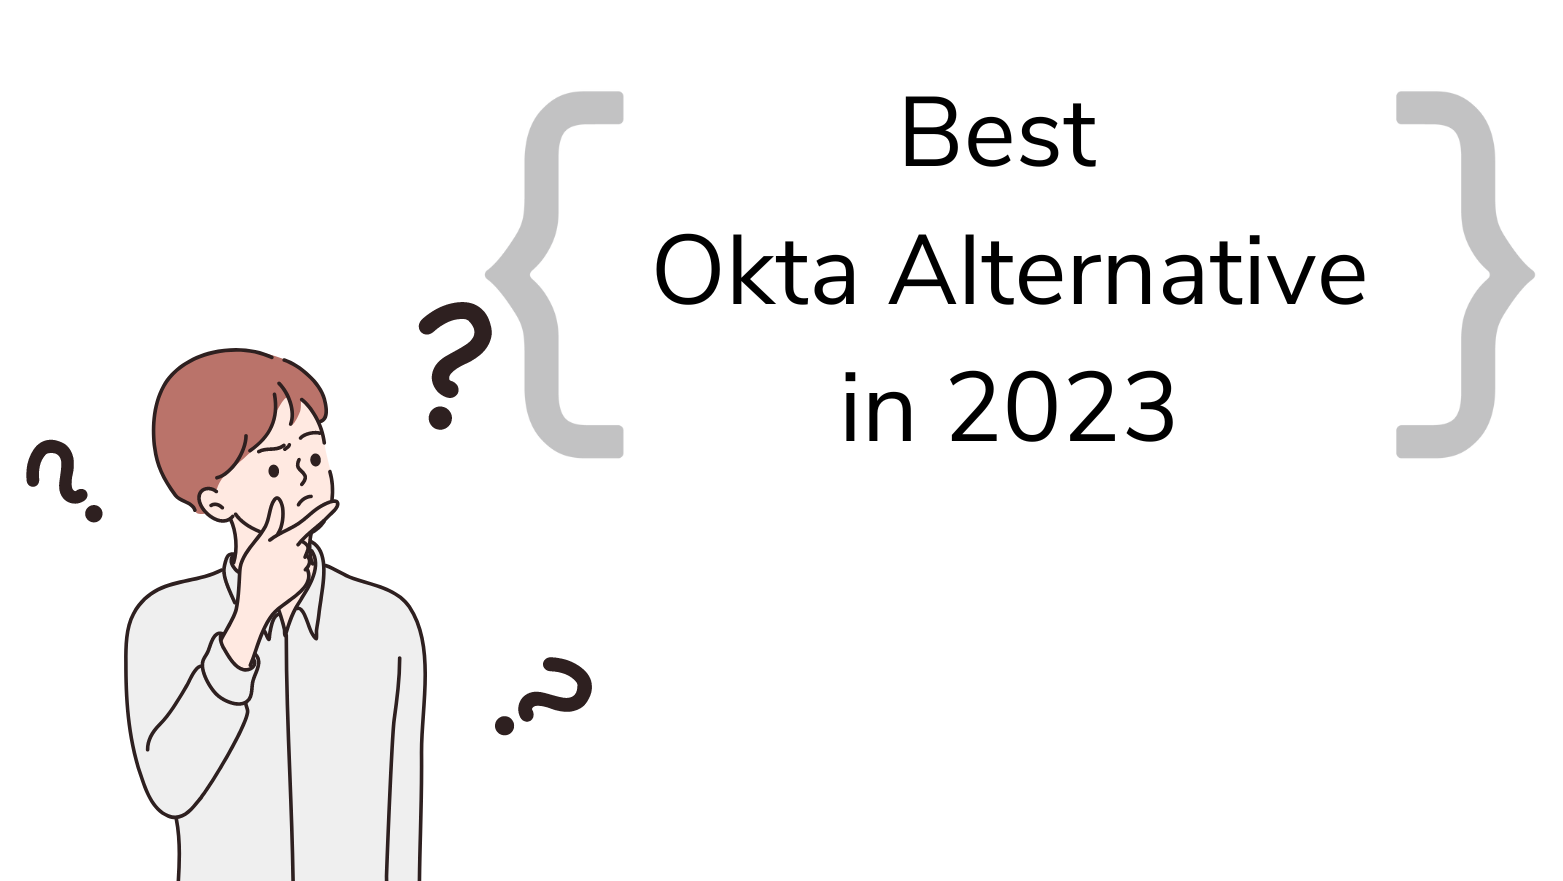 Best Okta Alternative in 2023